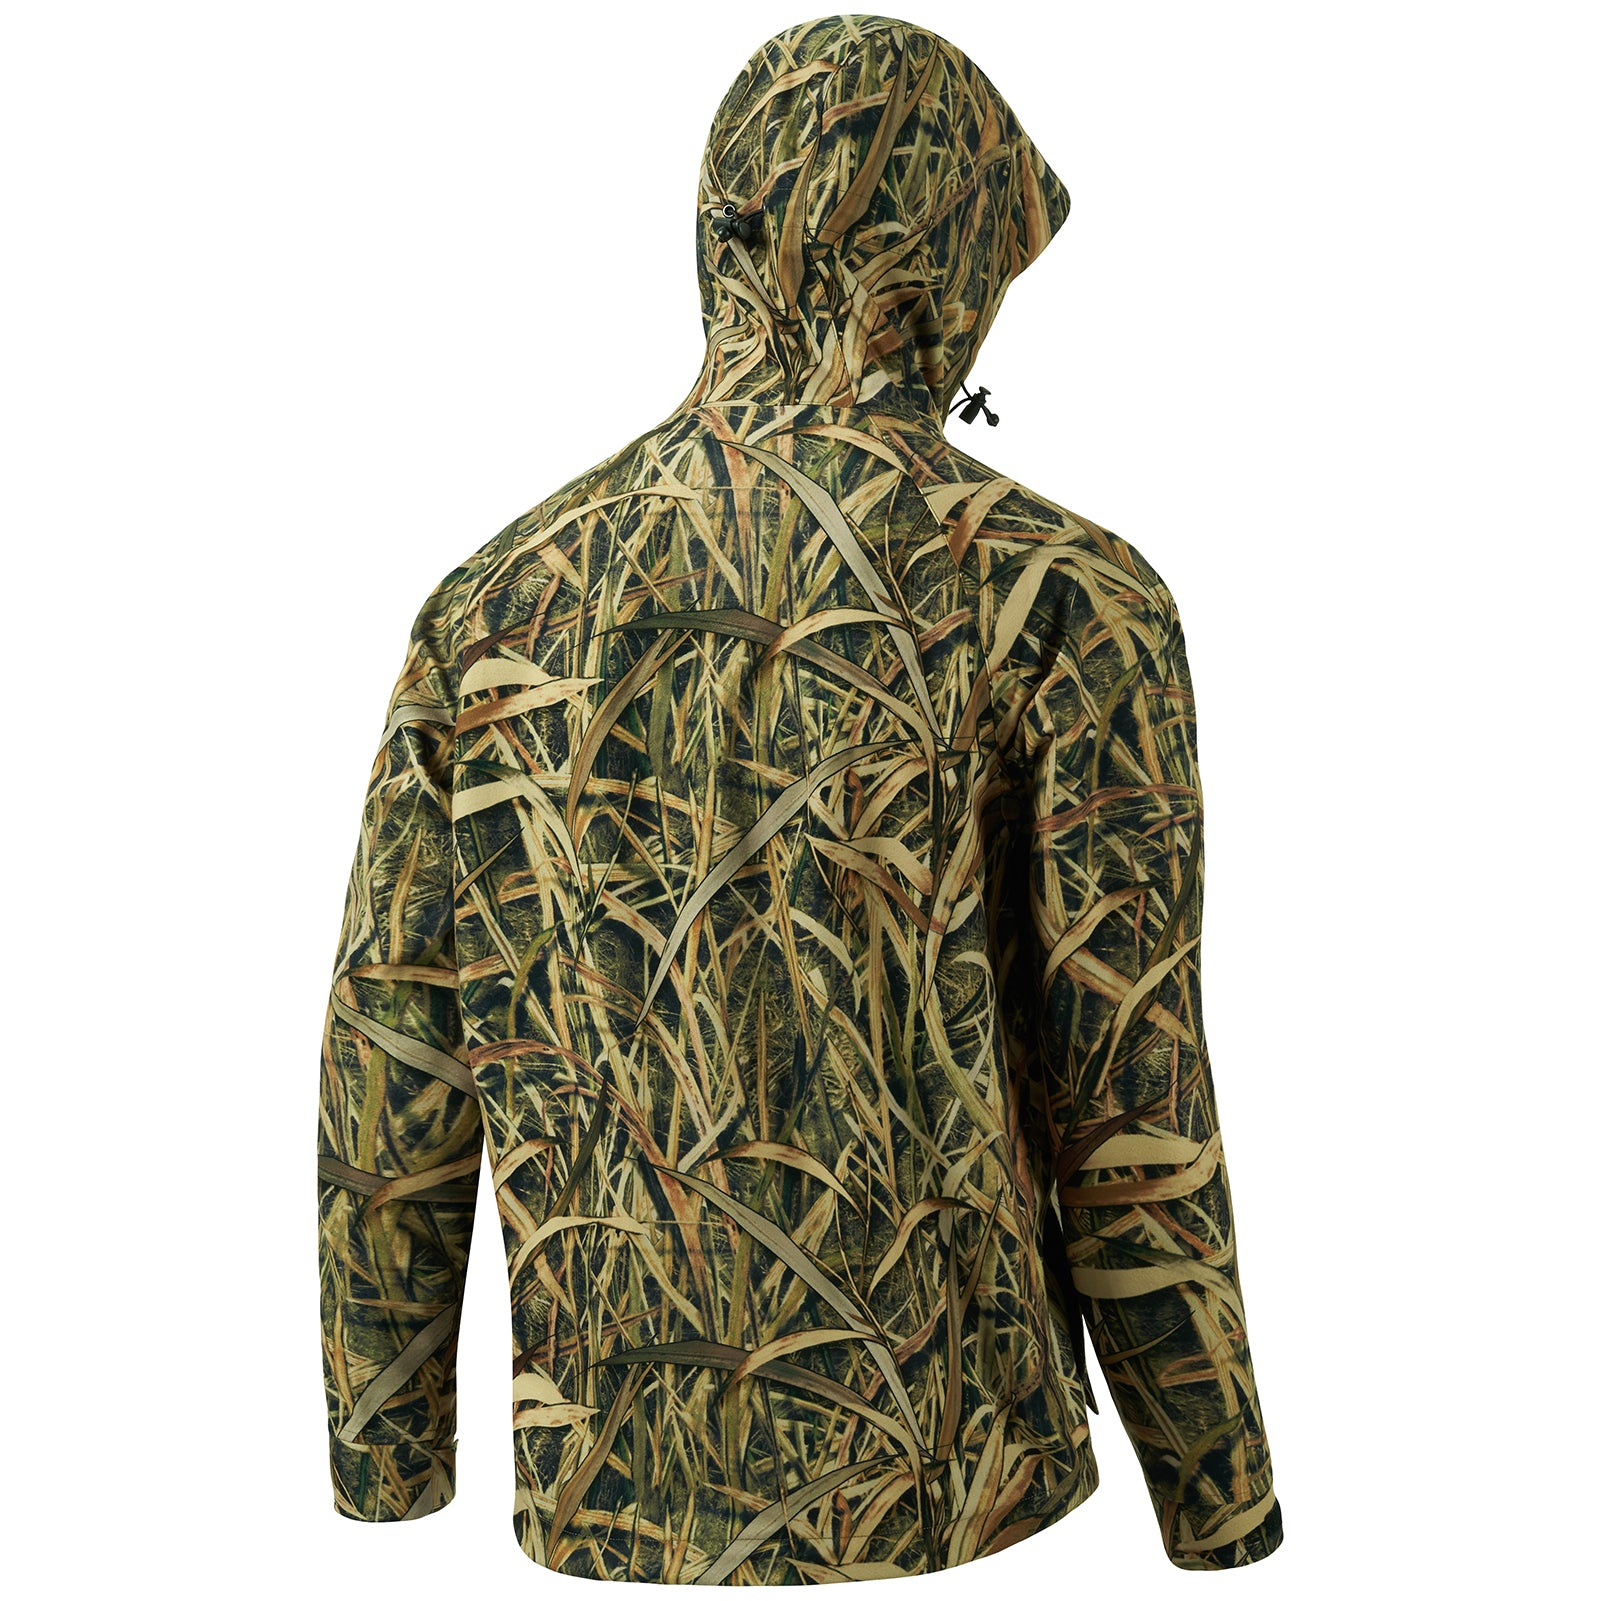 Men's Hunter Rain Jacket Breathable Camo Waterproof Hunting Jacket | Bassdash Hunting Reeds / 2XL